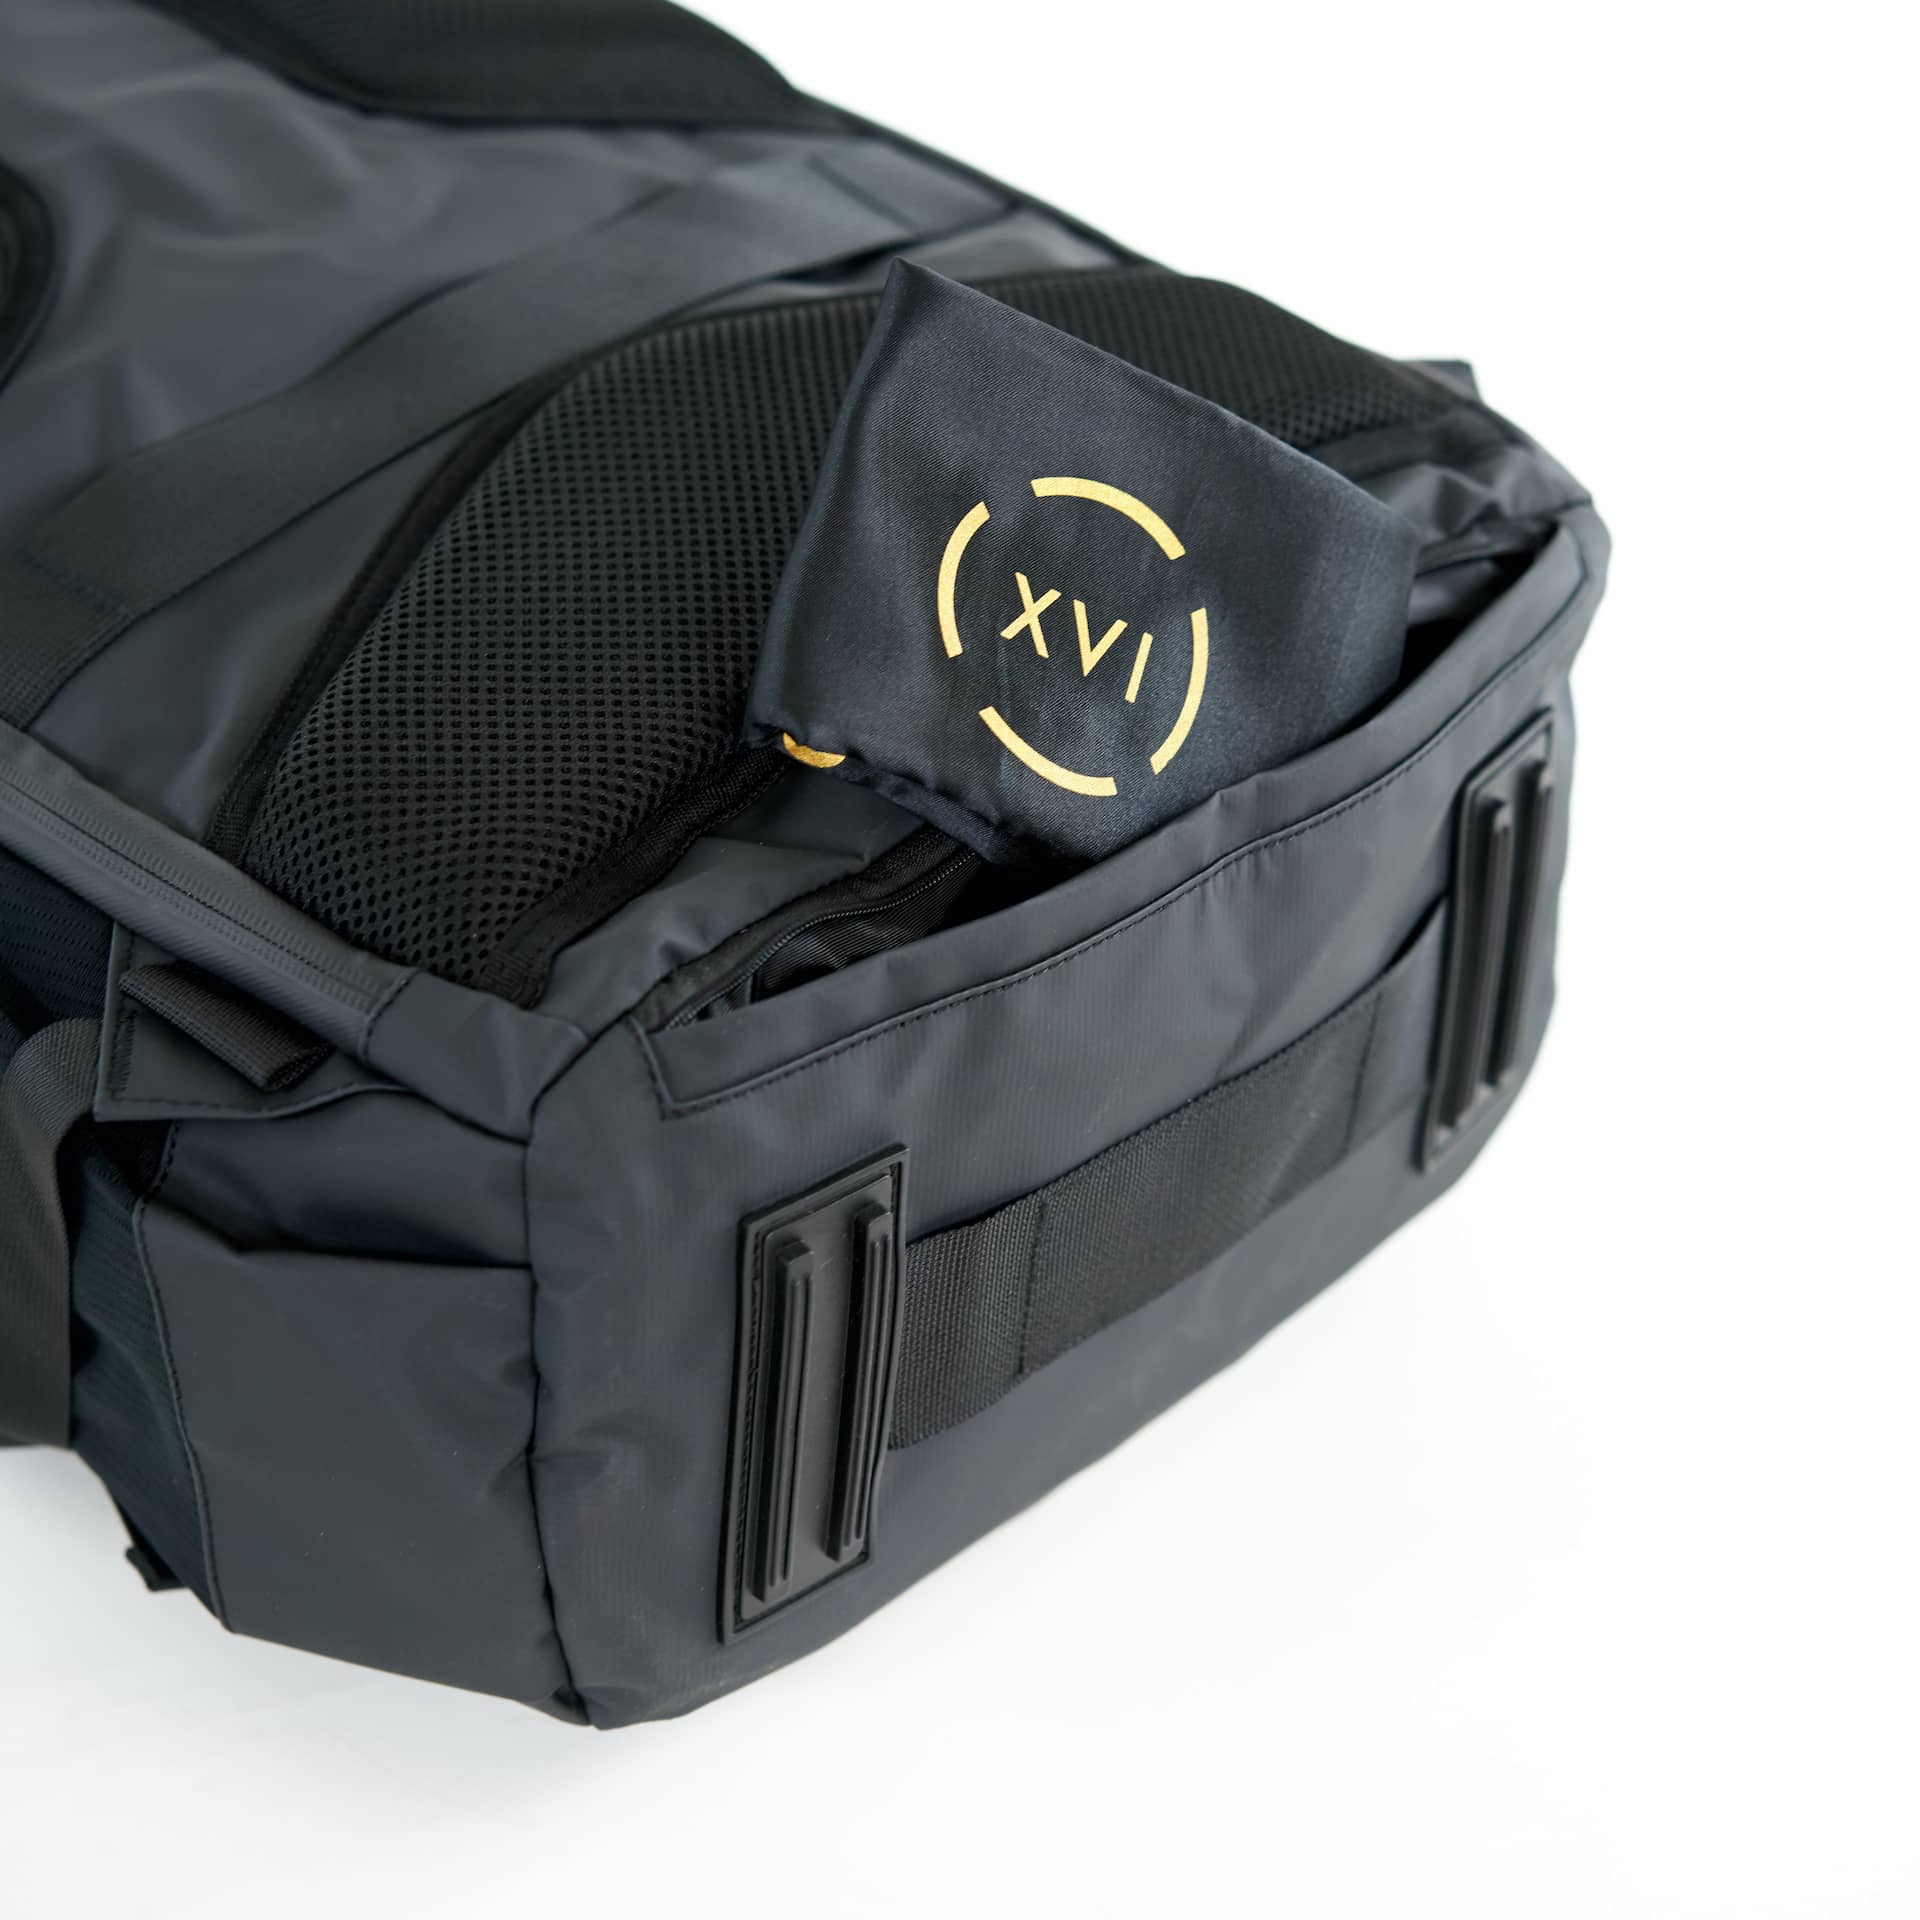 The Best DSLR Camera Backpack for Women and Men – Sunny 16